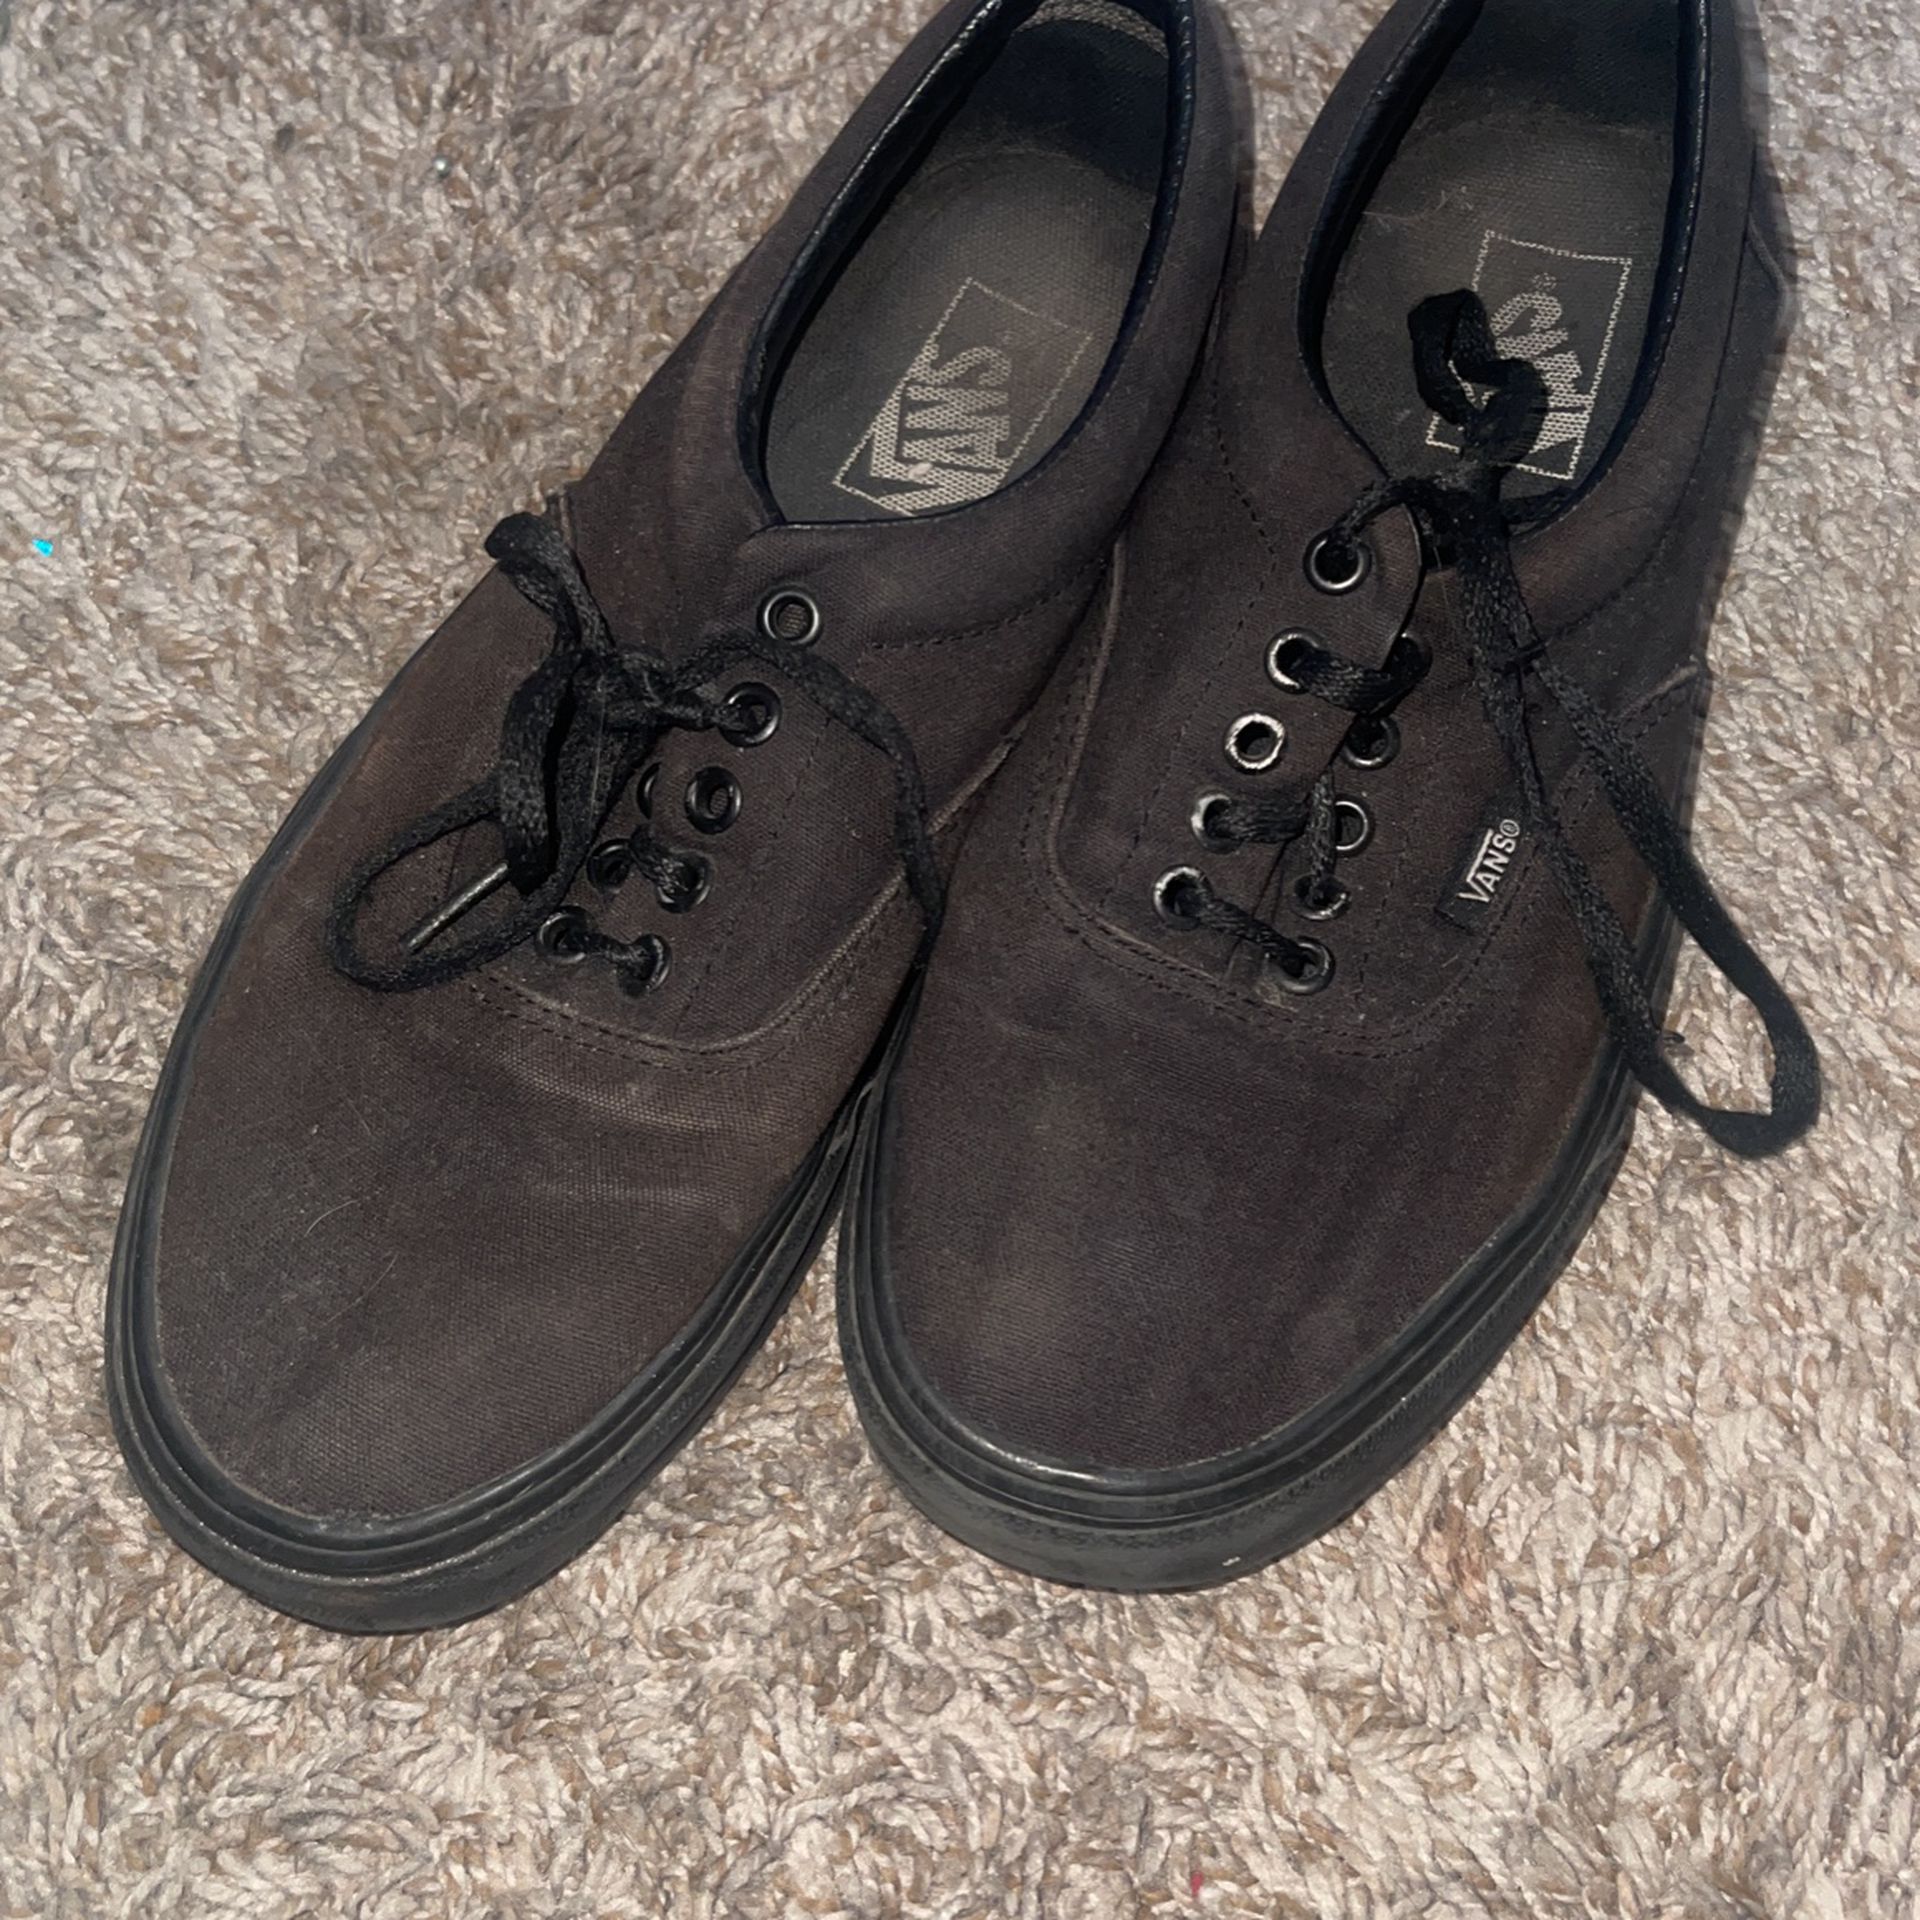 black vans era shoes, men’s 9